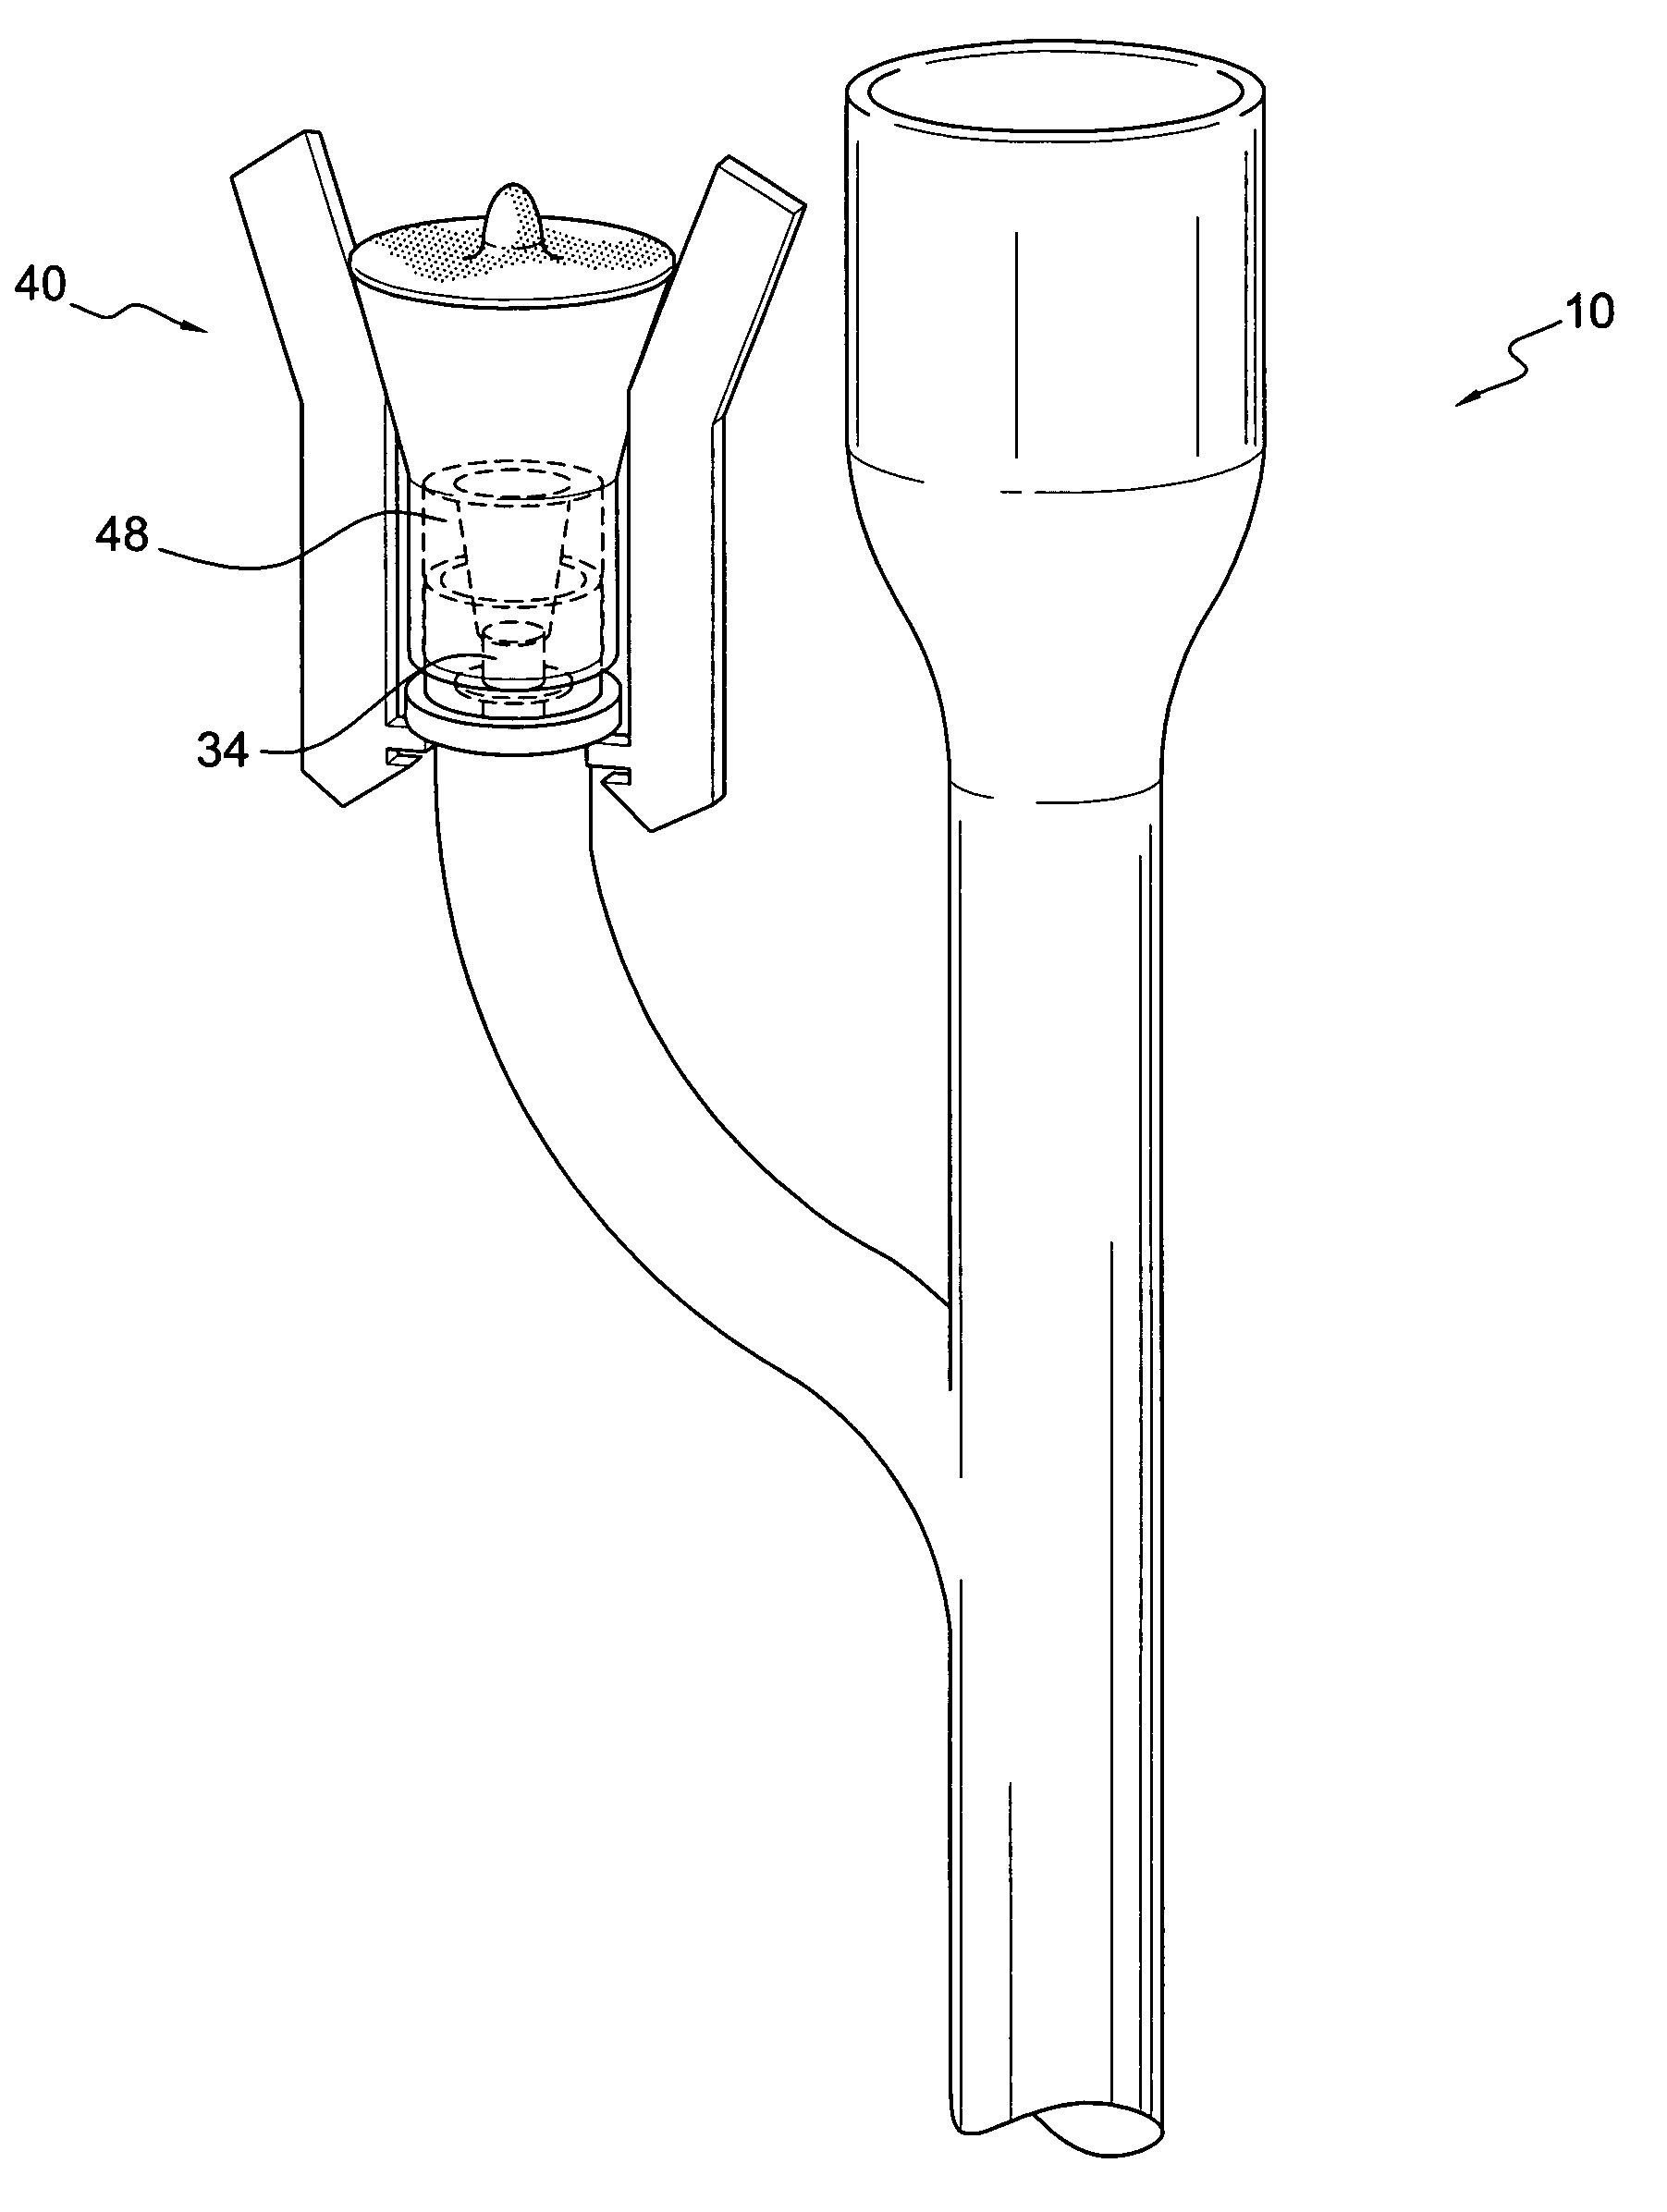 Foley catheter adaptor